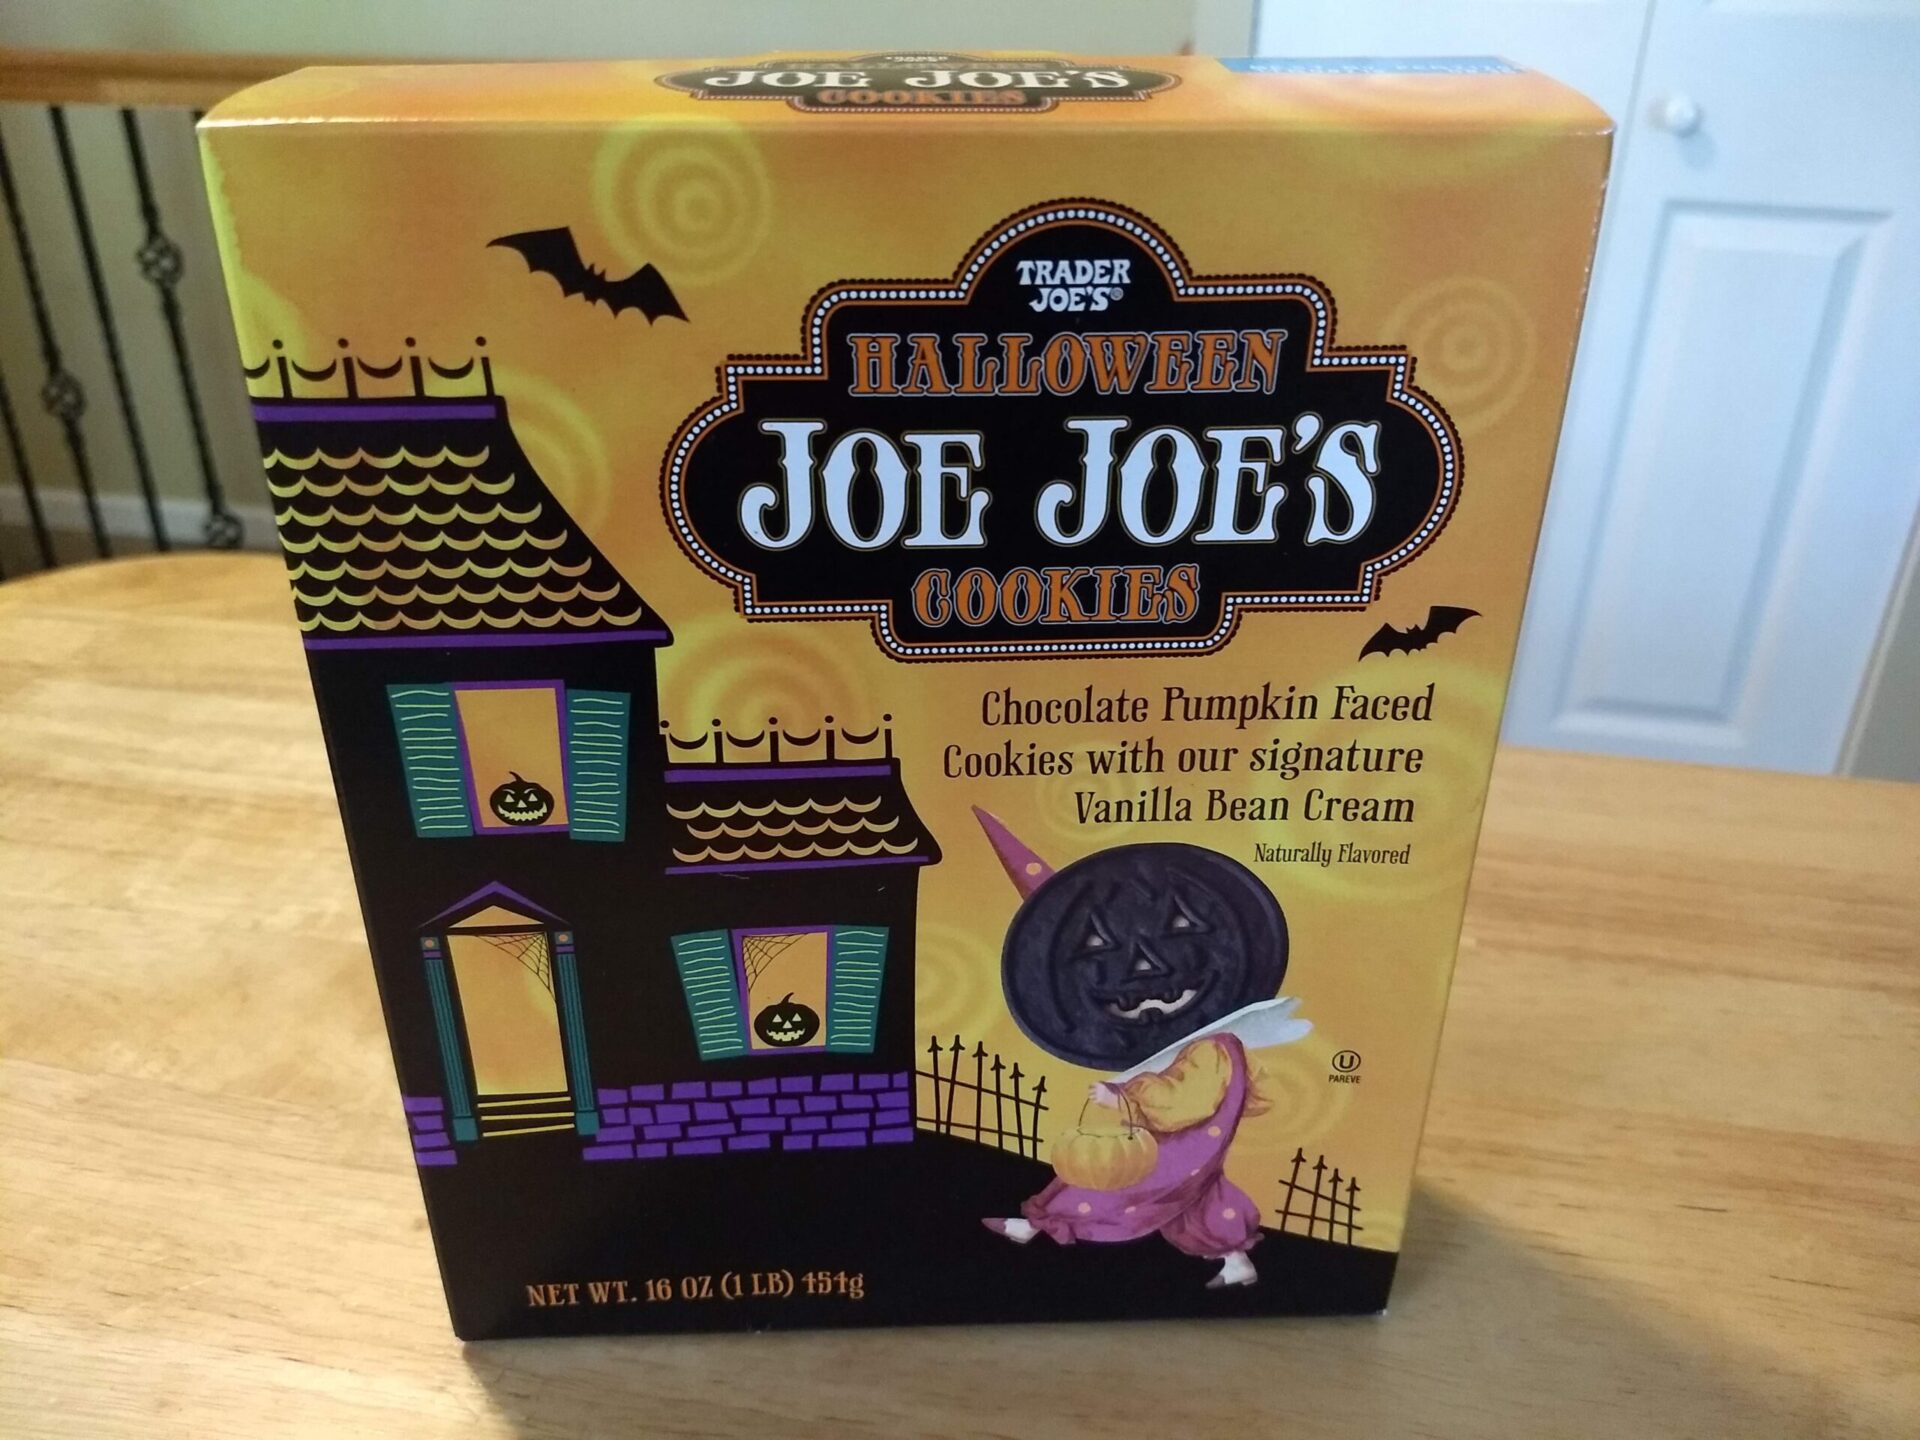 Trader Joe's Halloween Joe Joe's Cookies ALDI REVIEWER